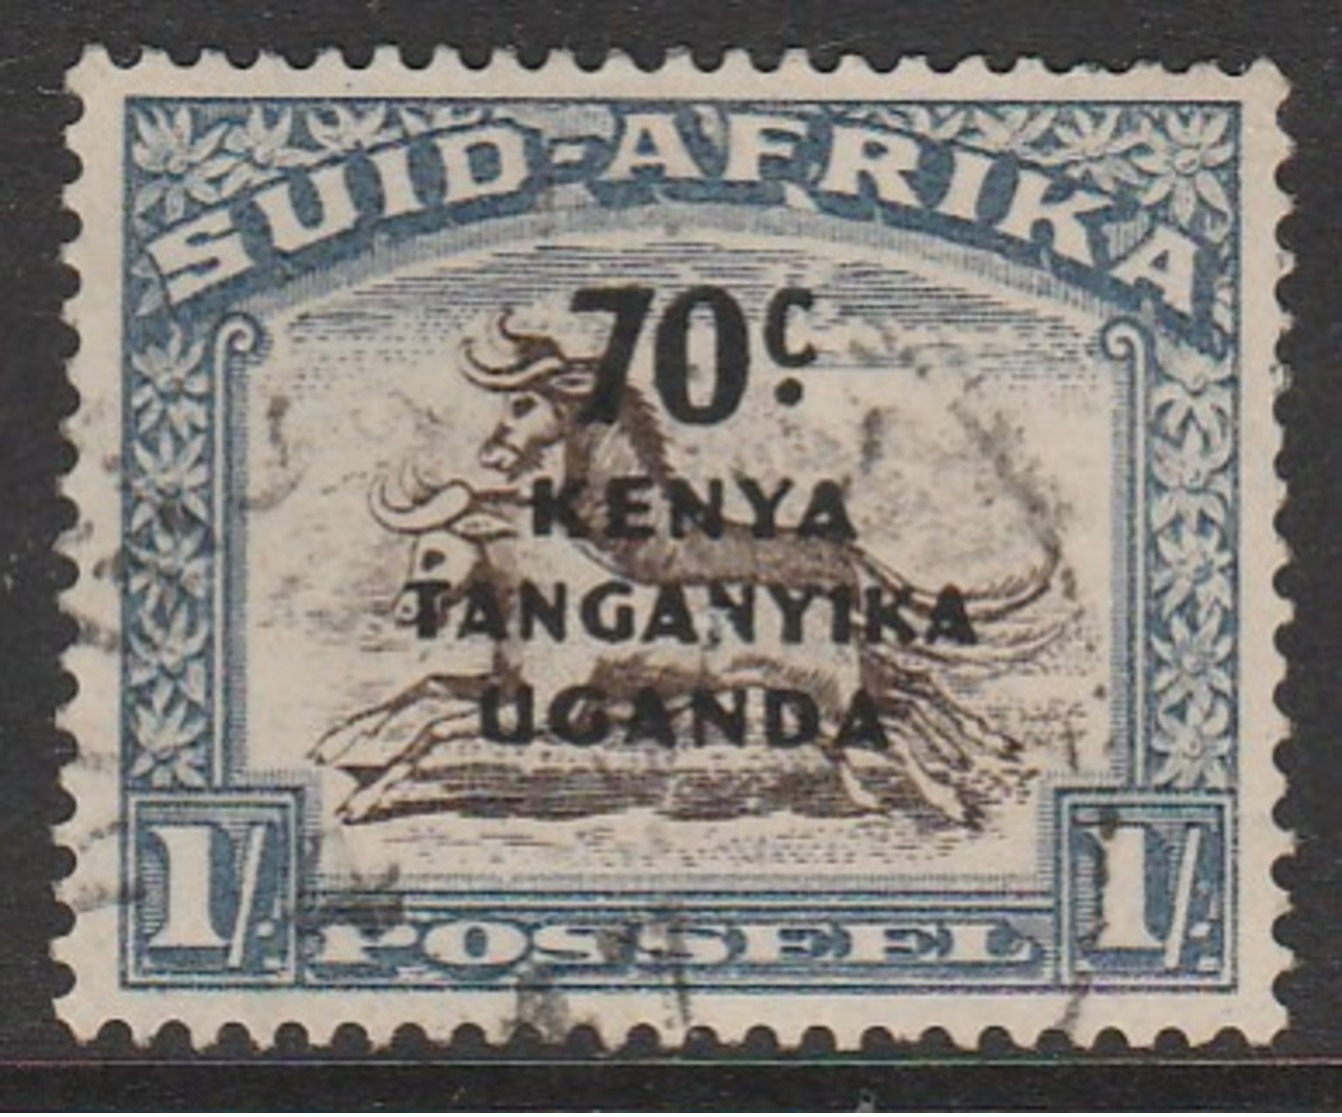 Kenya 1941 S Africa Overprinted "KENYA TANGANYIKA UGANDA" Surcharged Value 70 C Greyish Ultramarine/violet  SW 47 O Used - Kenya, Uganda & Tanganyika